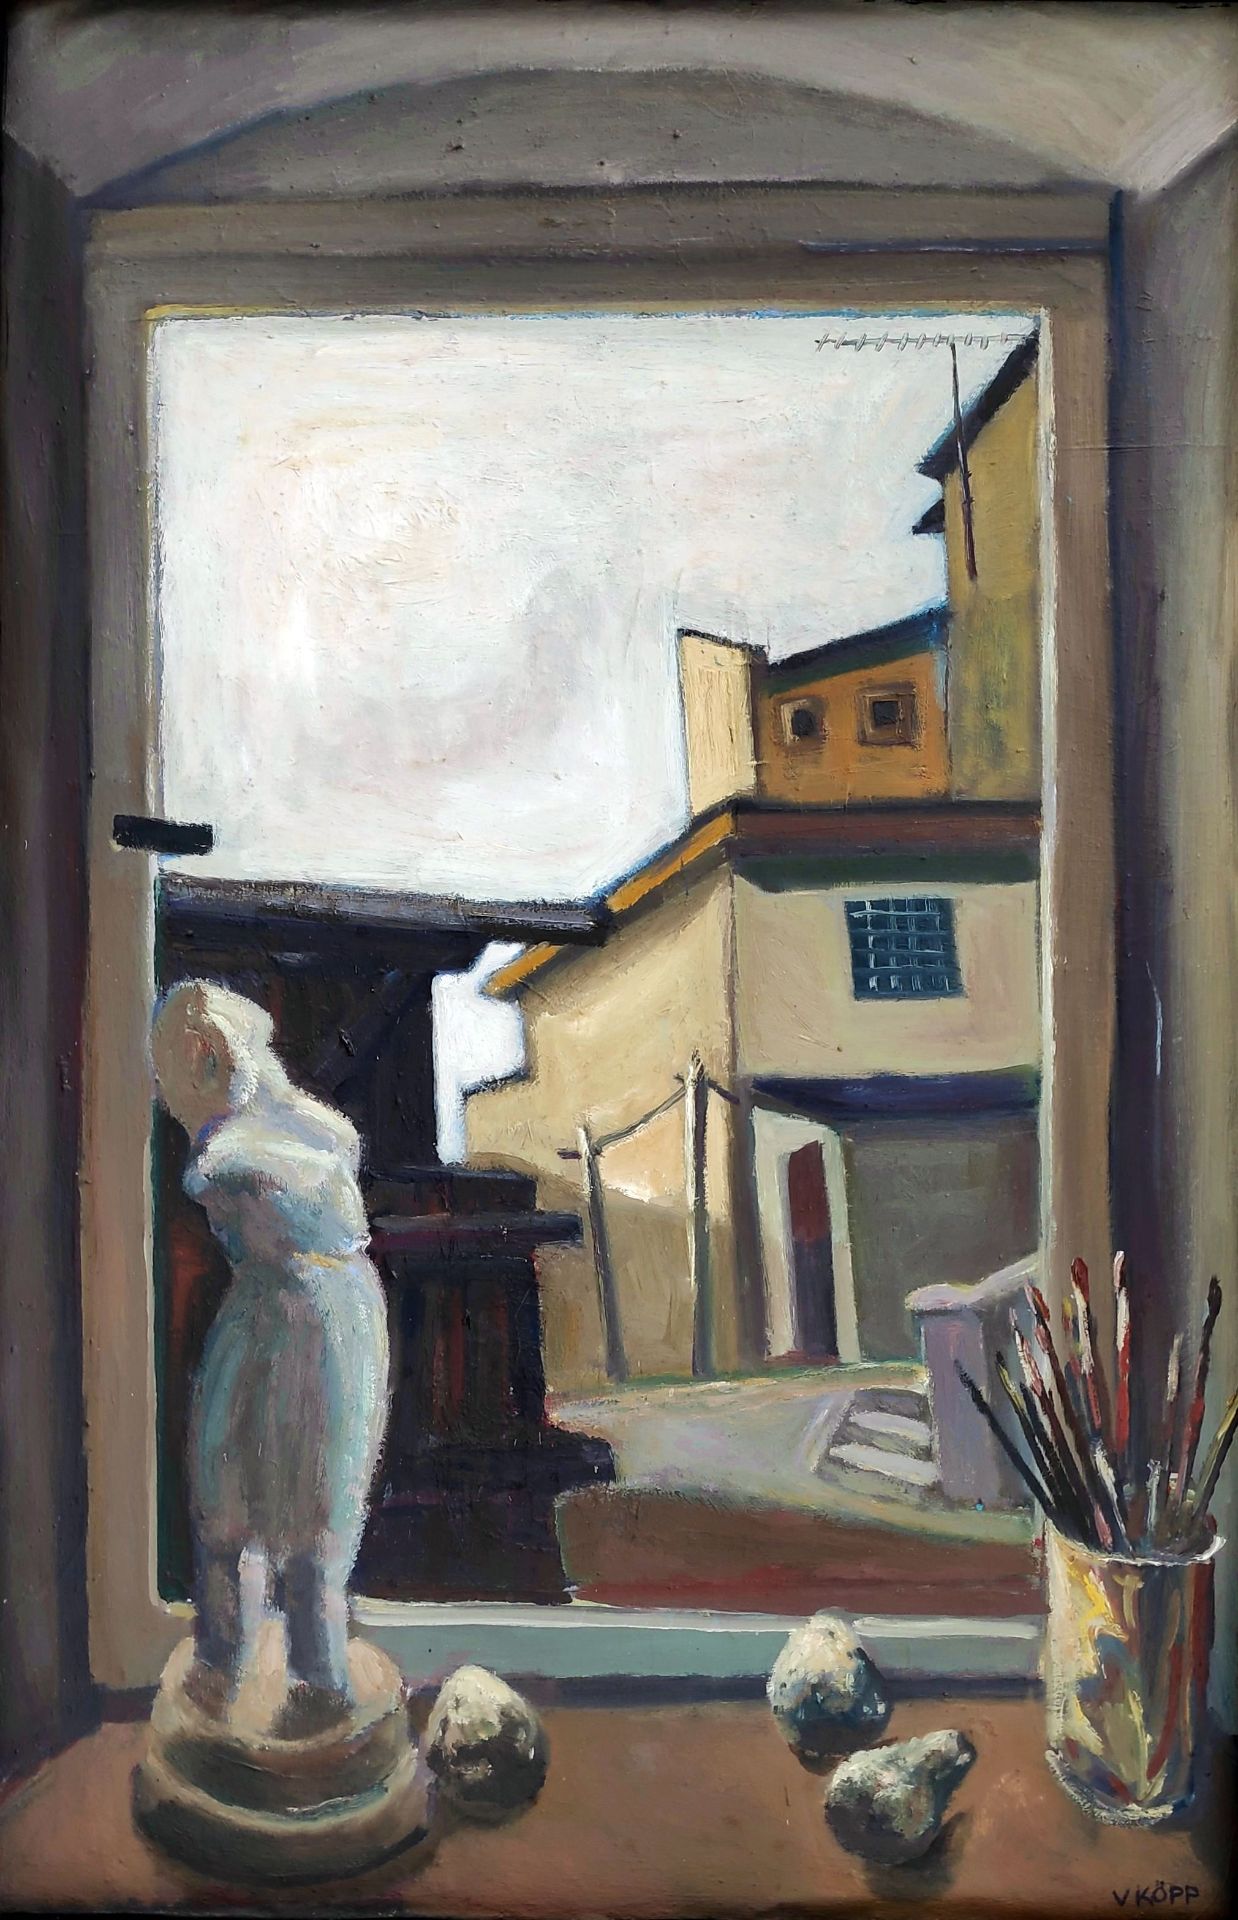 Köpp, Volker (1953 Usedom, lebt in Ahlbeck) "Atelierfenster"